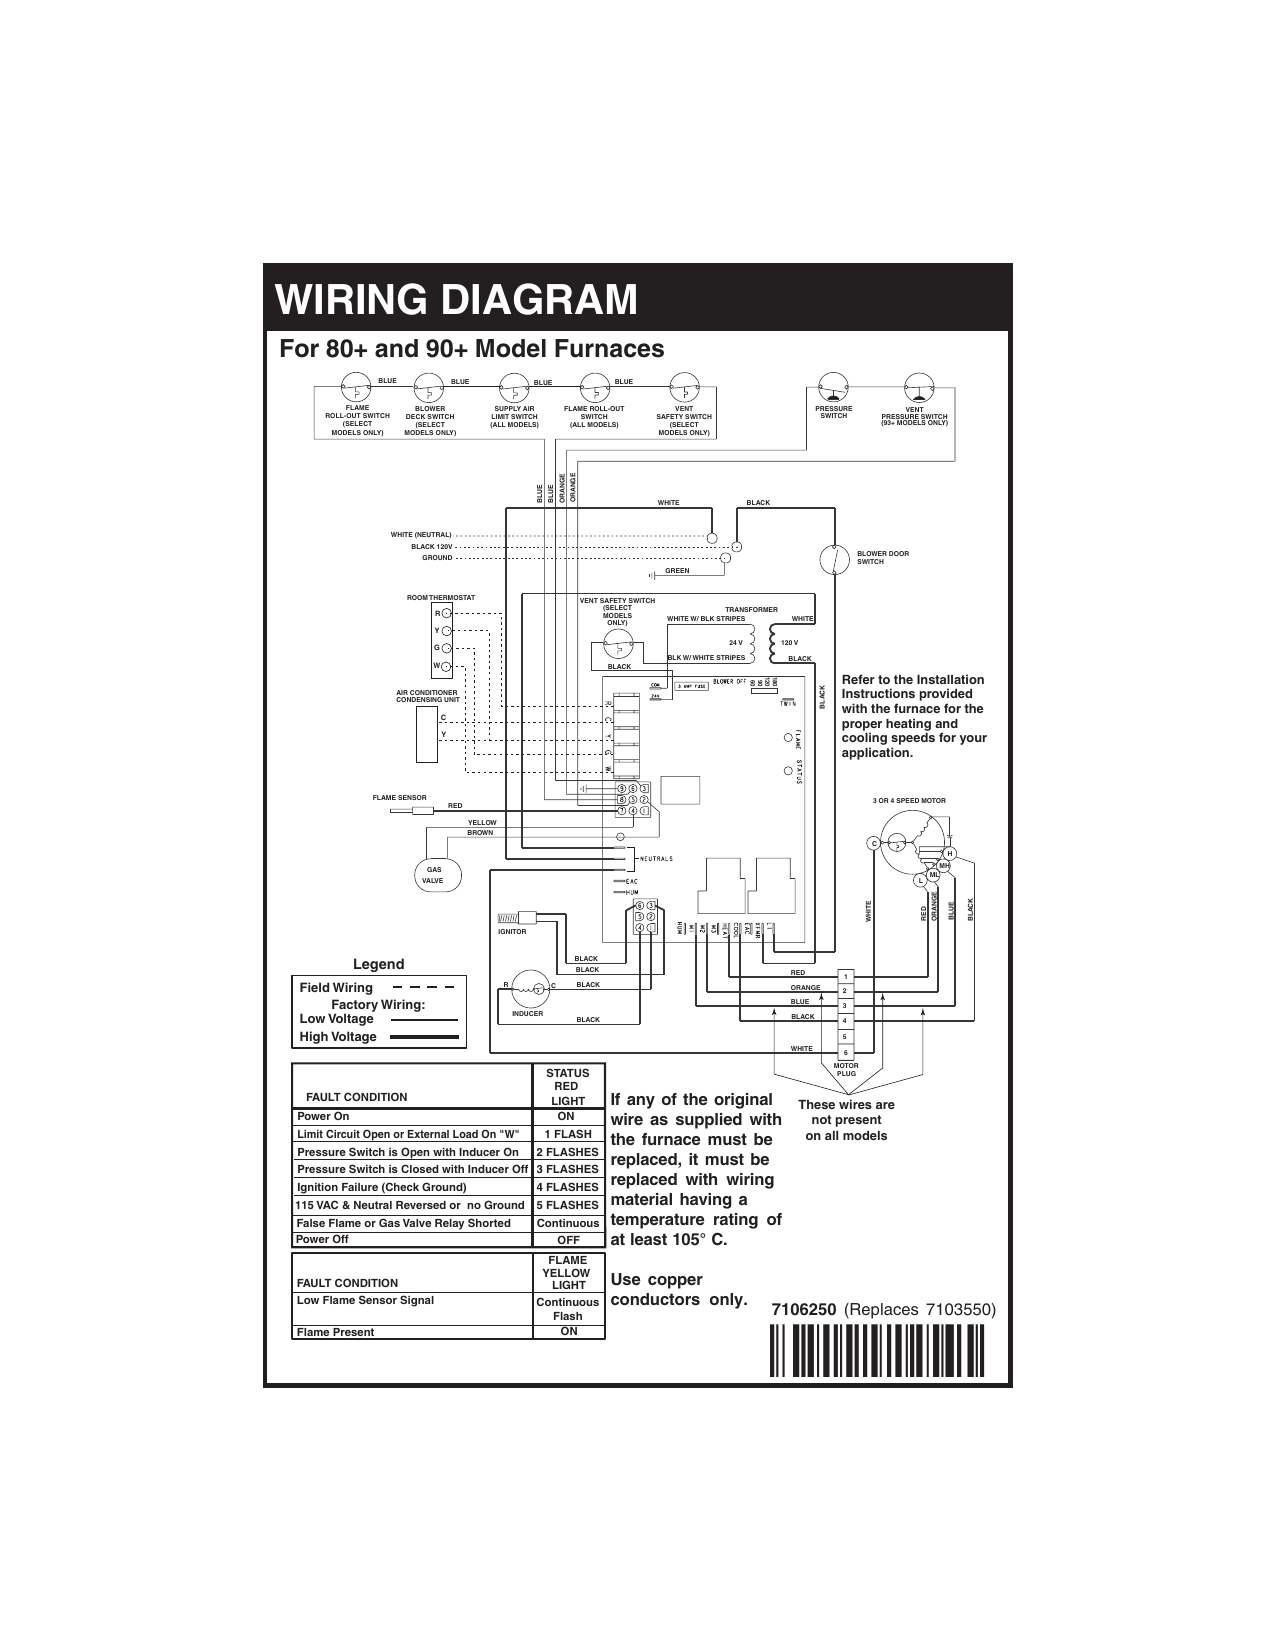 Westinghouse L1RC Wiring Diagram | Manualzz Typical House Wiring Diagram Manualzz